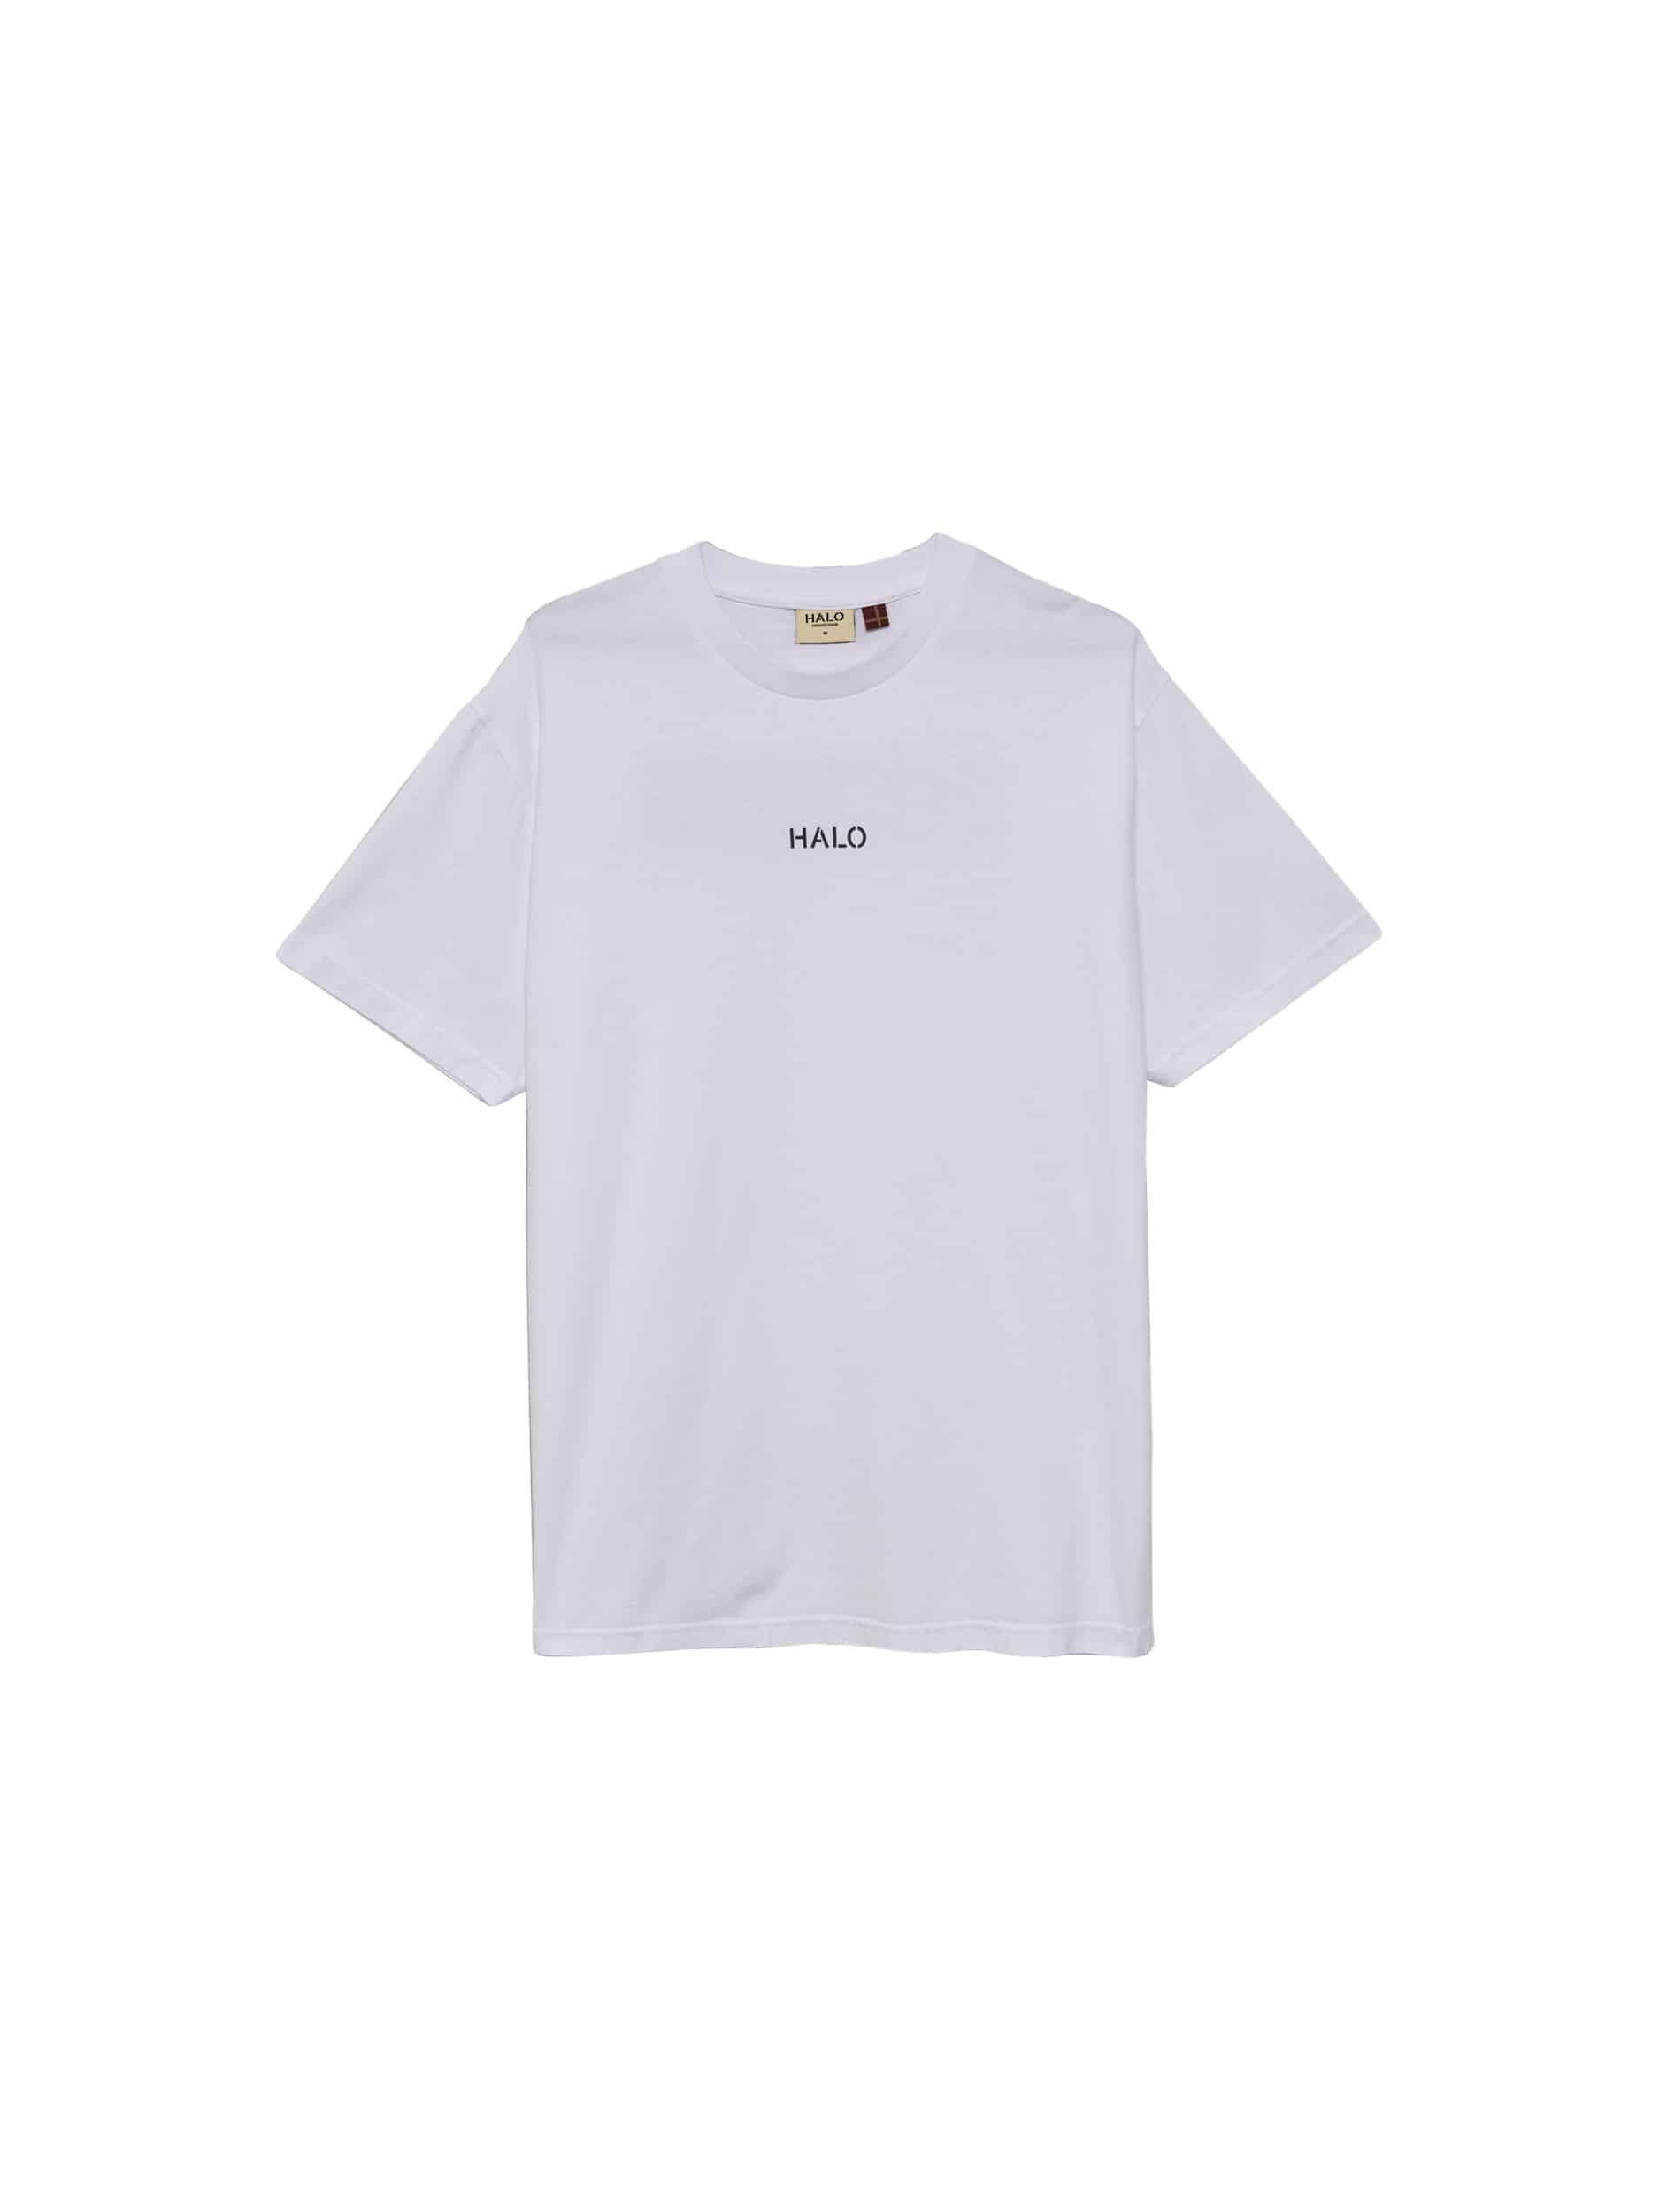 HALO Graphic T-Shirt - White